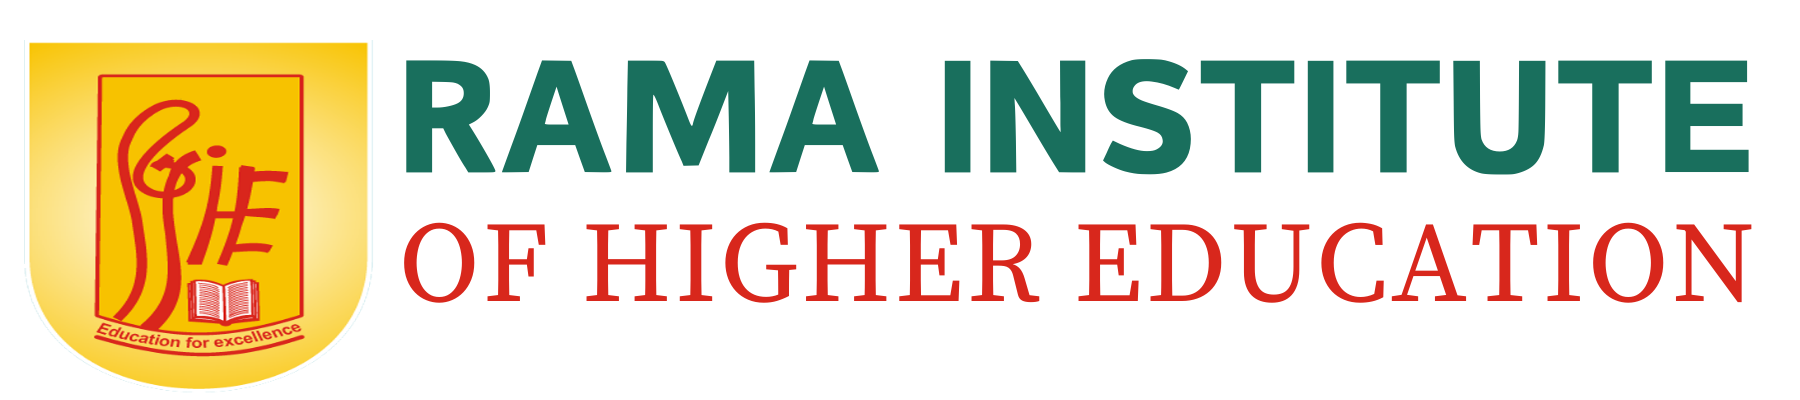 Rama Institute Of Higher Education